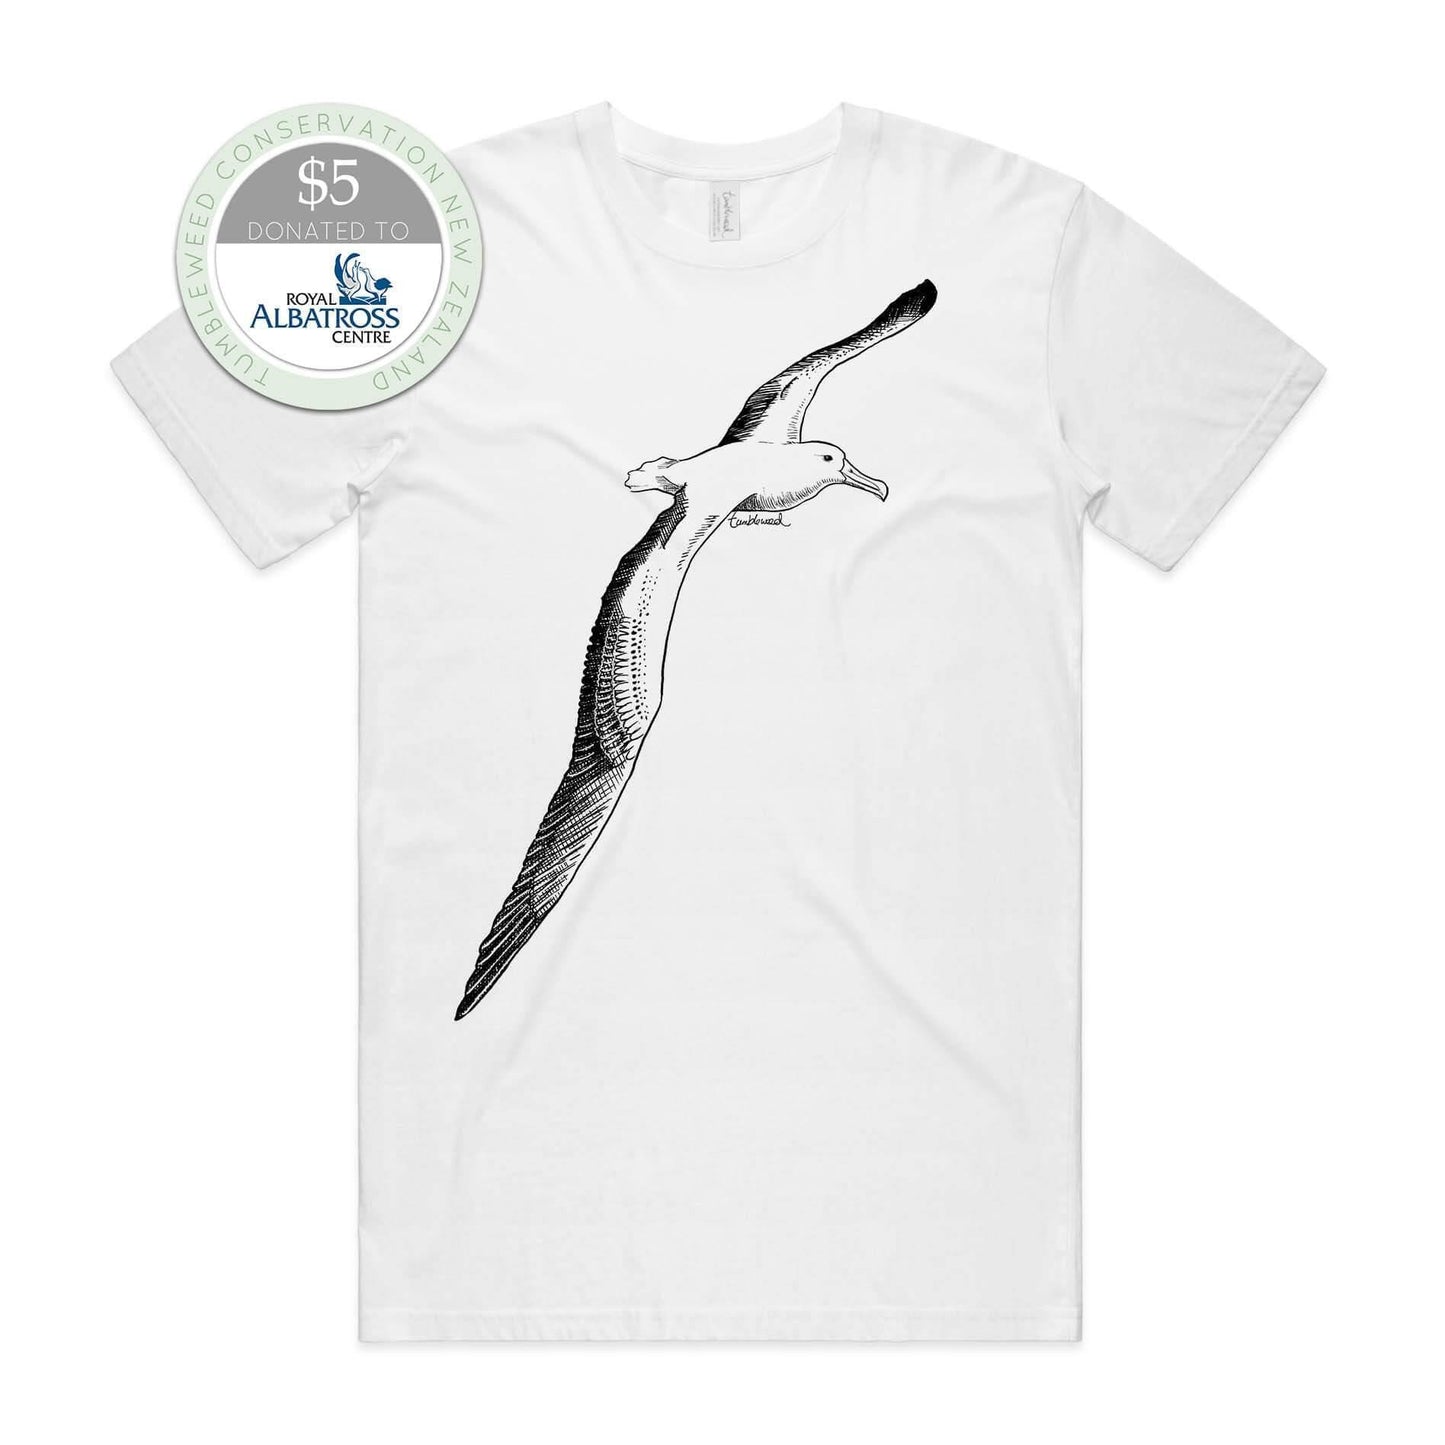 White, male t-shirt featuring a screen printed albatross design.